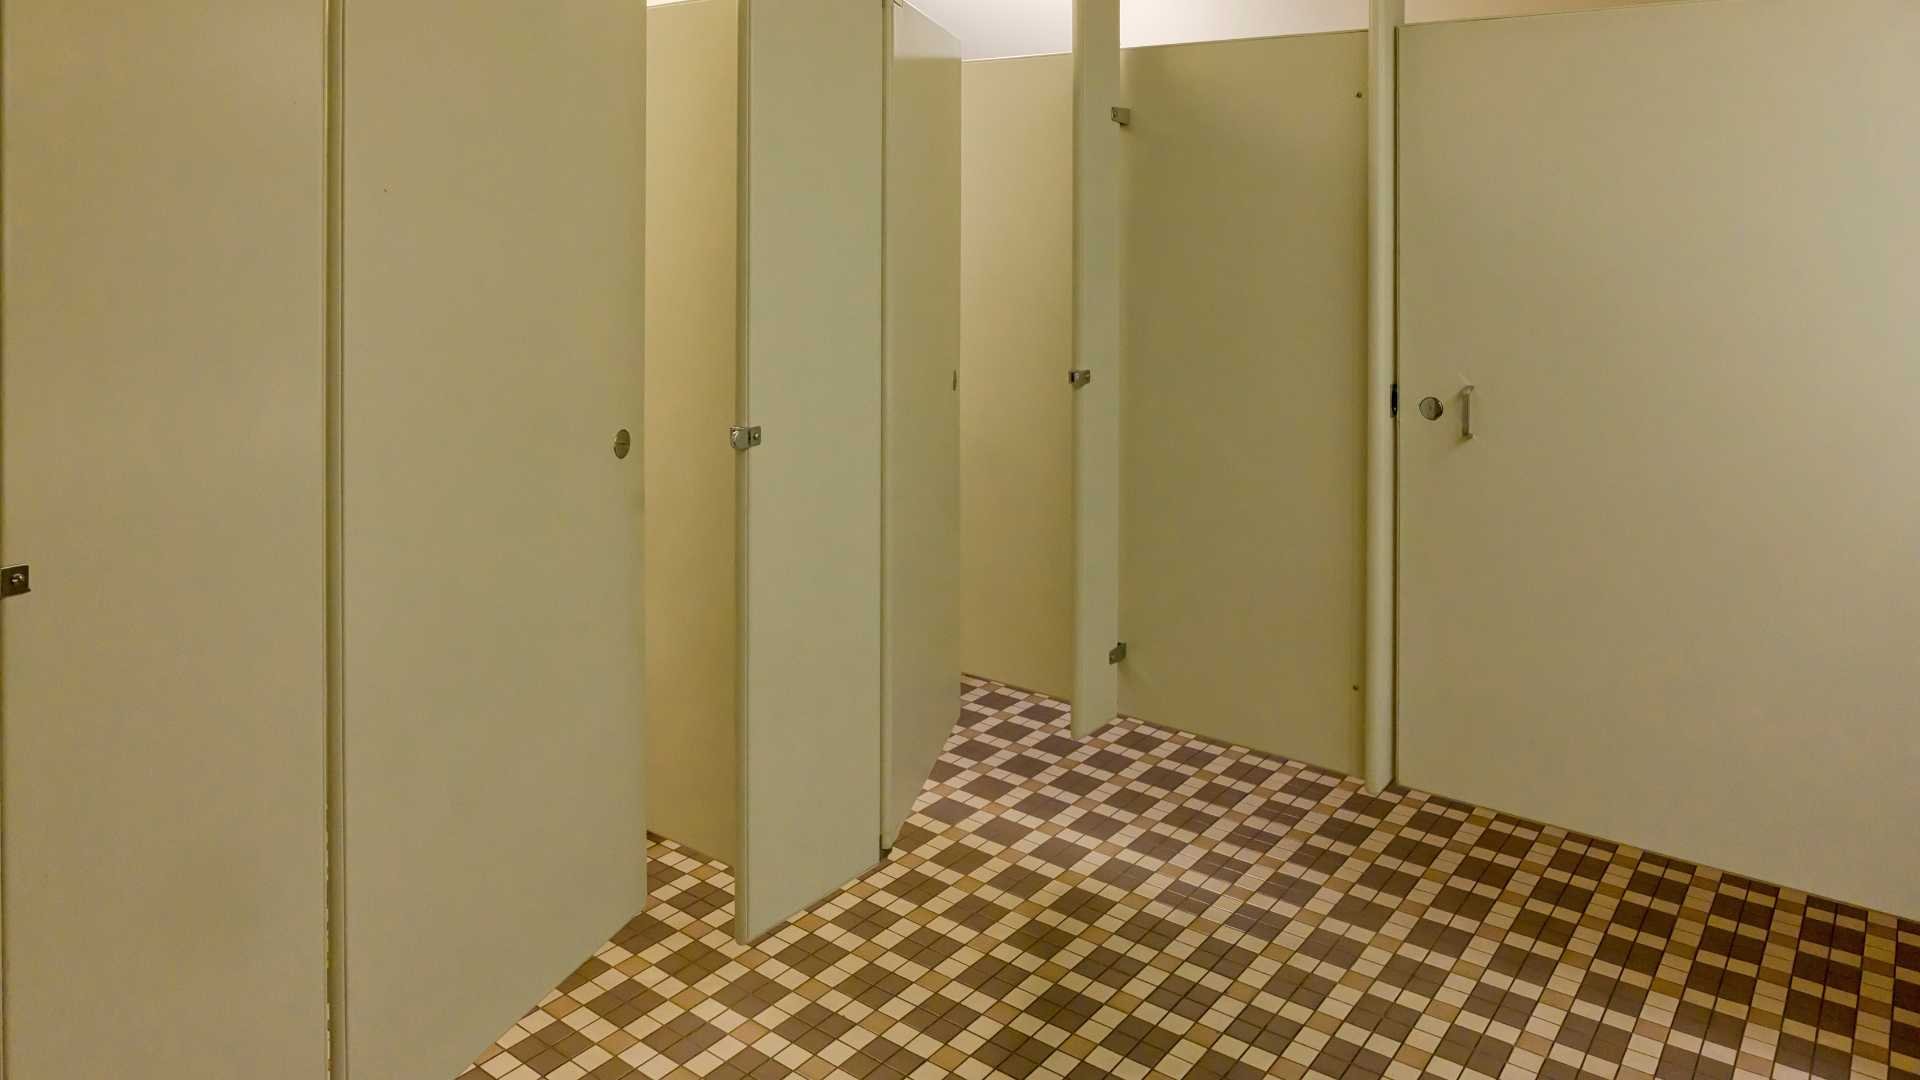 bathroom stalls with gaps